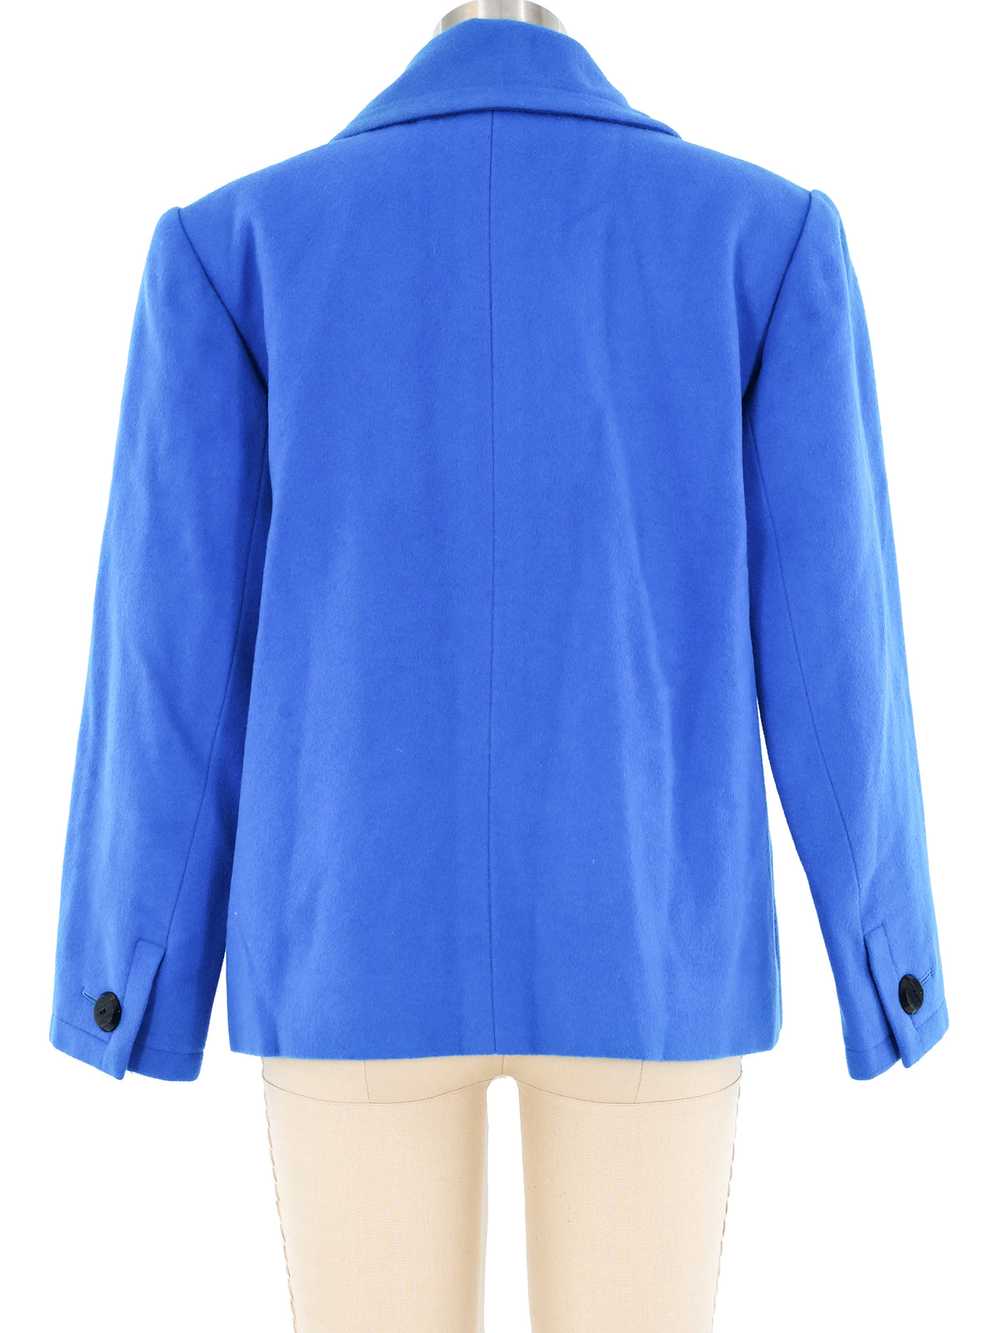 Yves Saint Laurent Wool Cropped Jacket - image 4